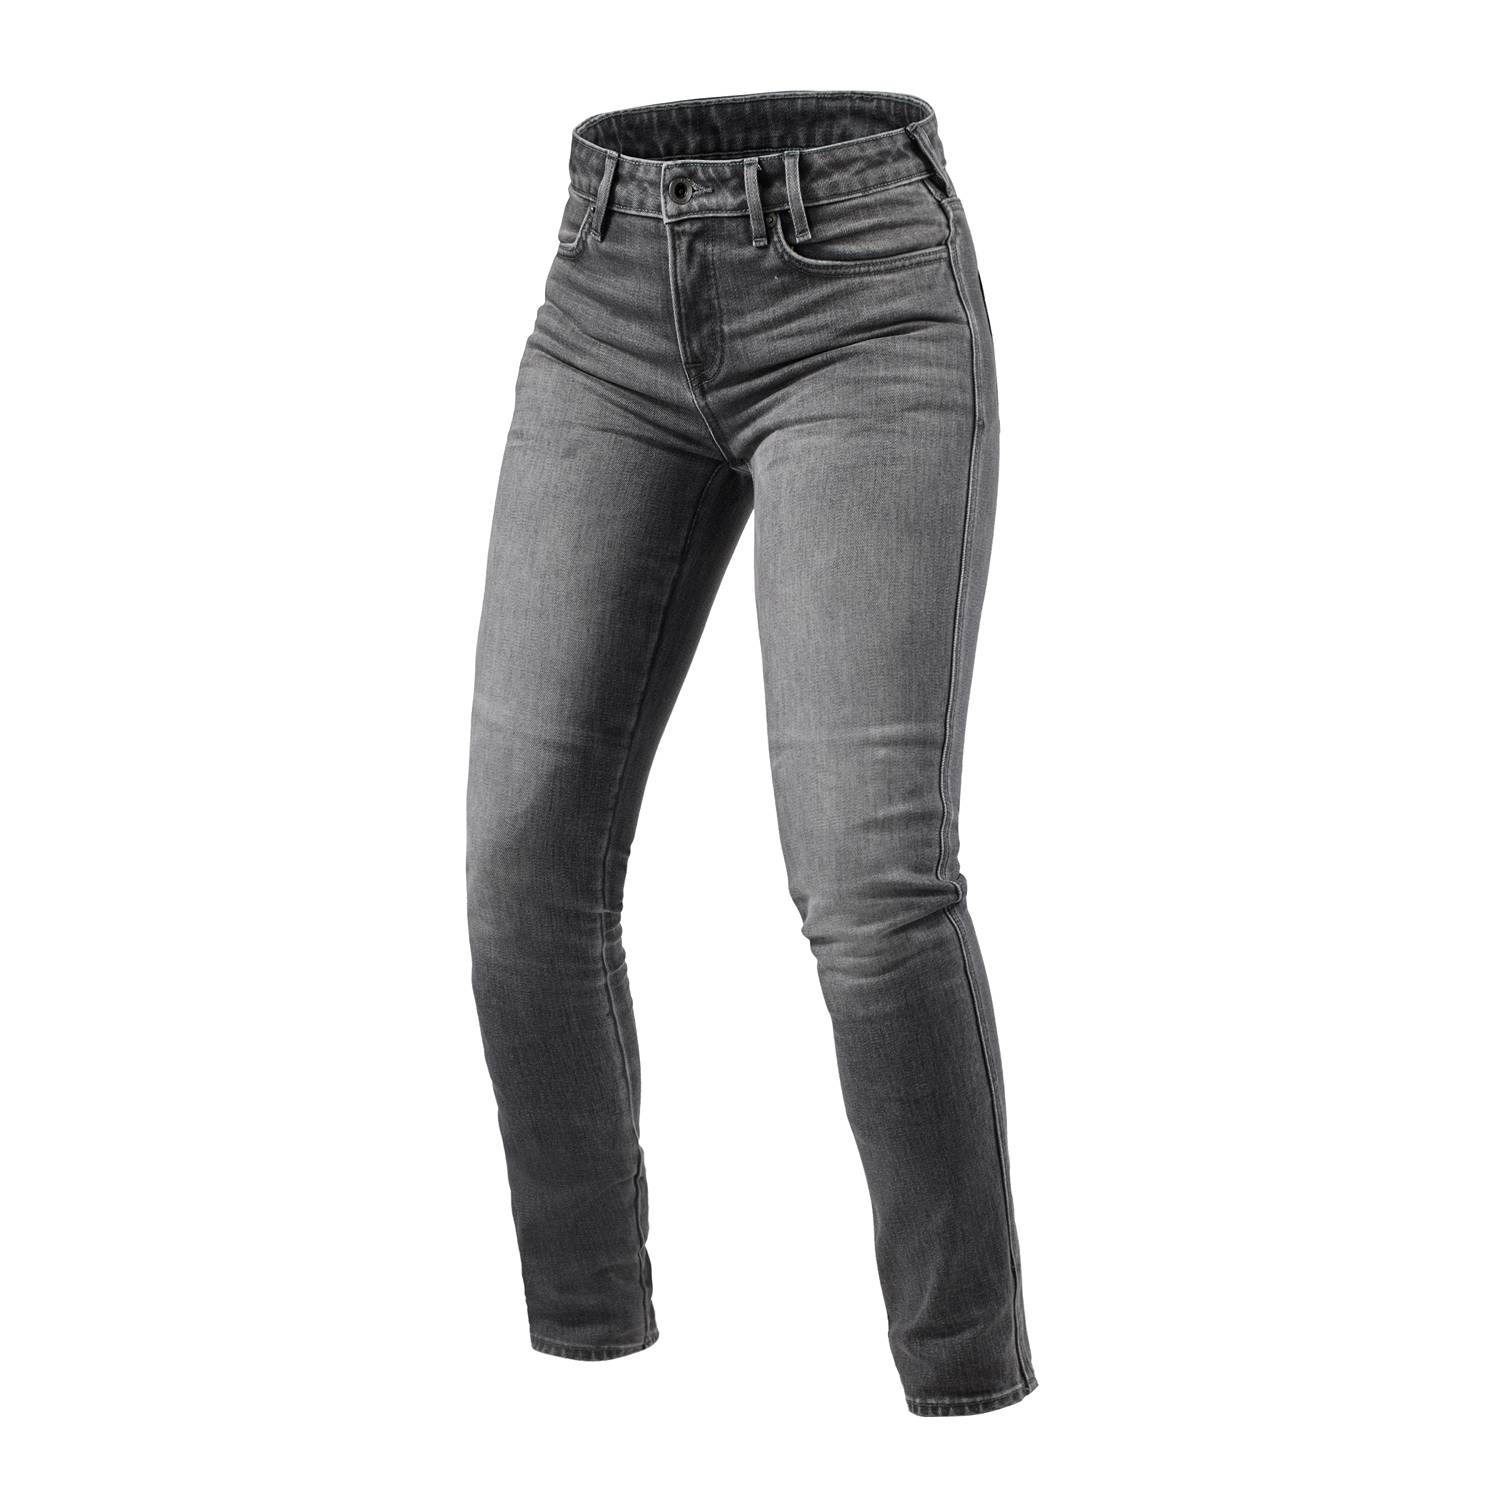 Image of REV'IT! Jeans Shelby 2 Ladies SK Medium Grey Stone L32 Talla L32/W24